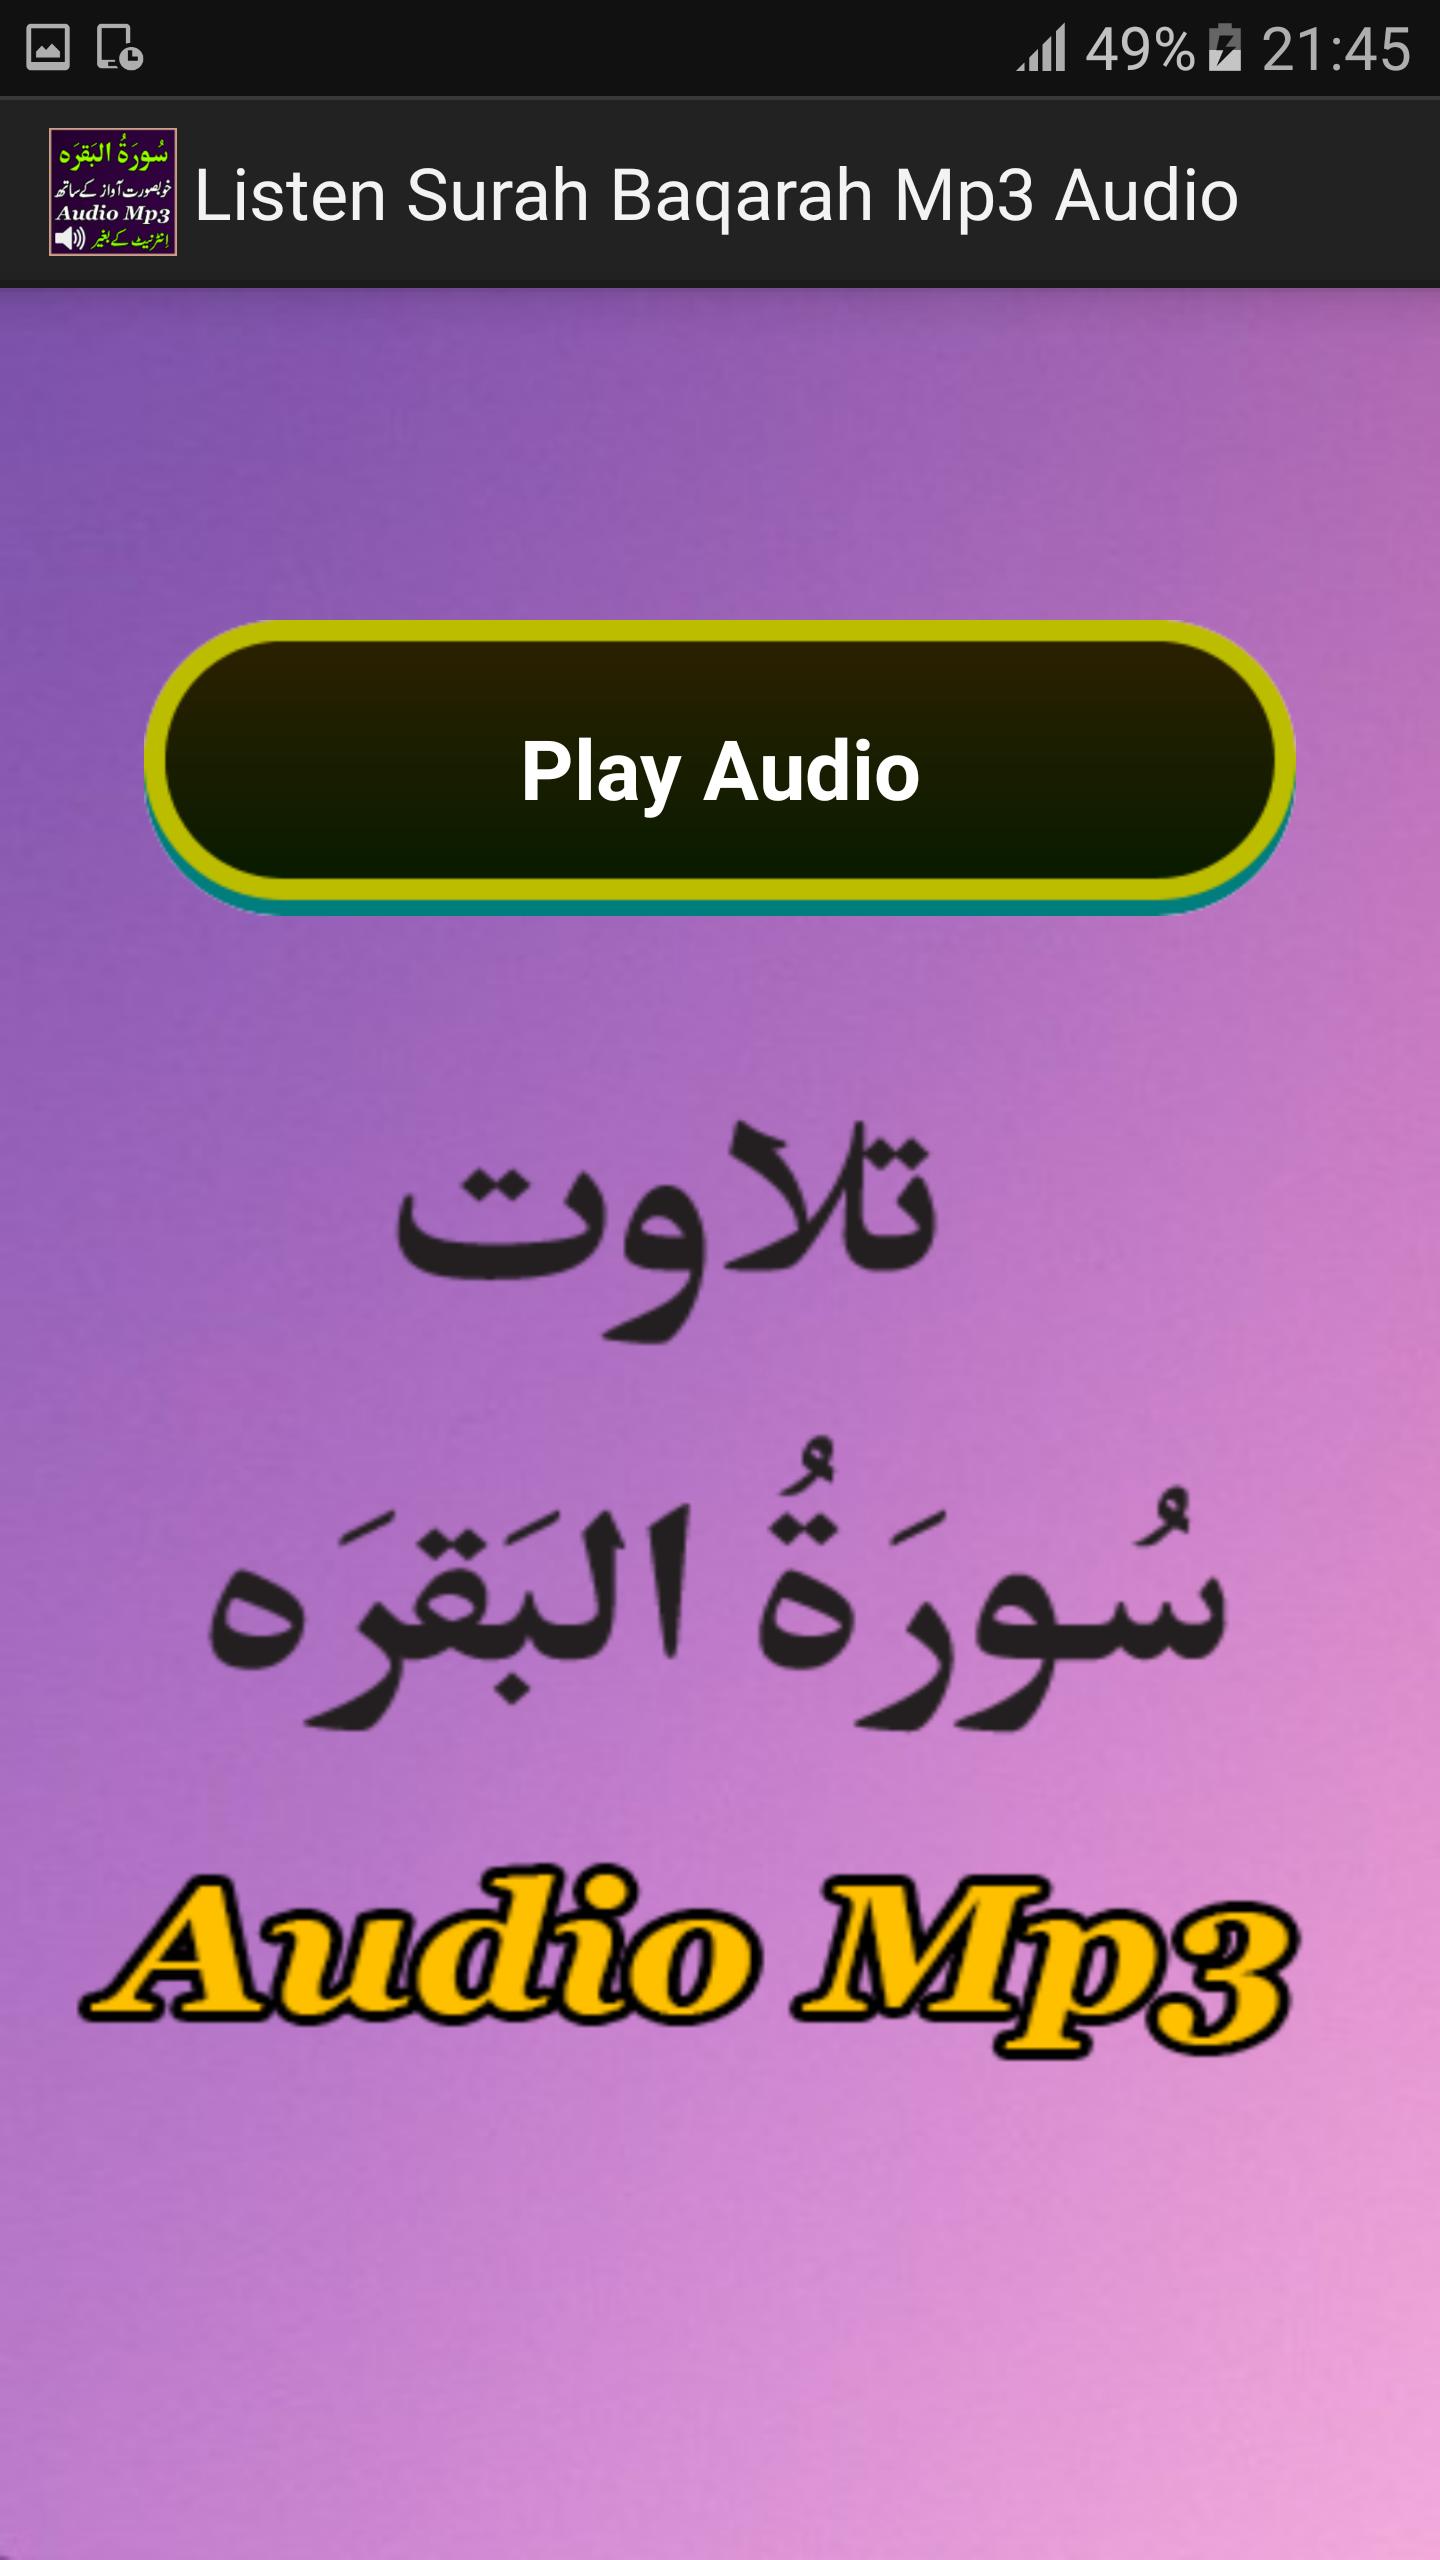 Listen Surah Baqarah Mp3 Audio for Android - APK Download